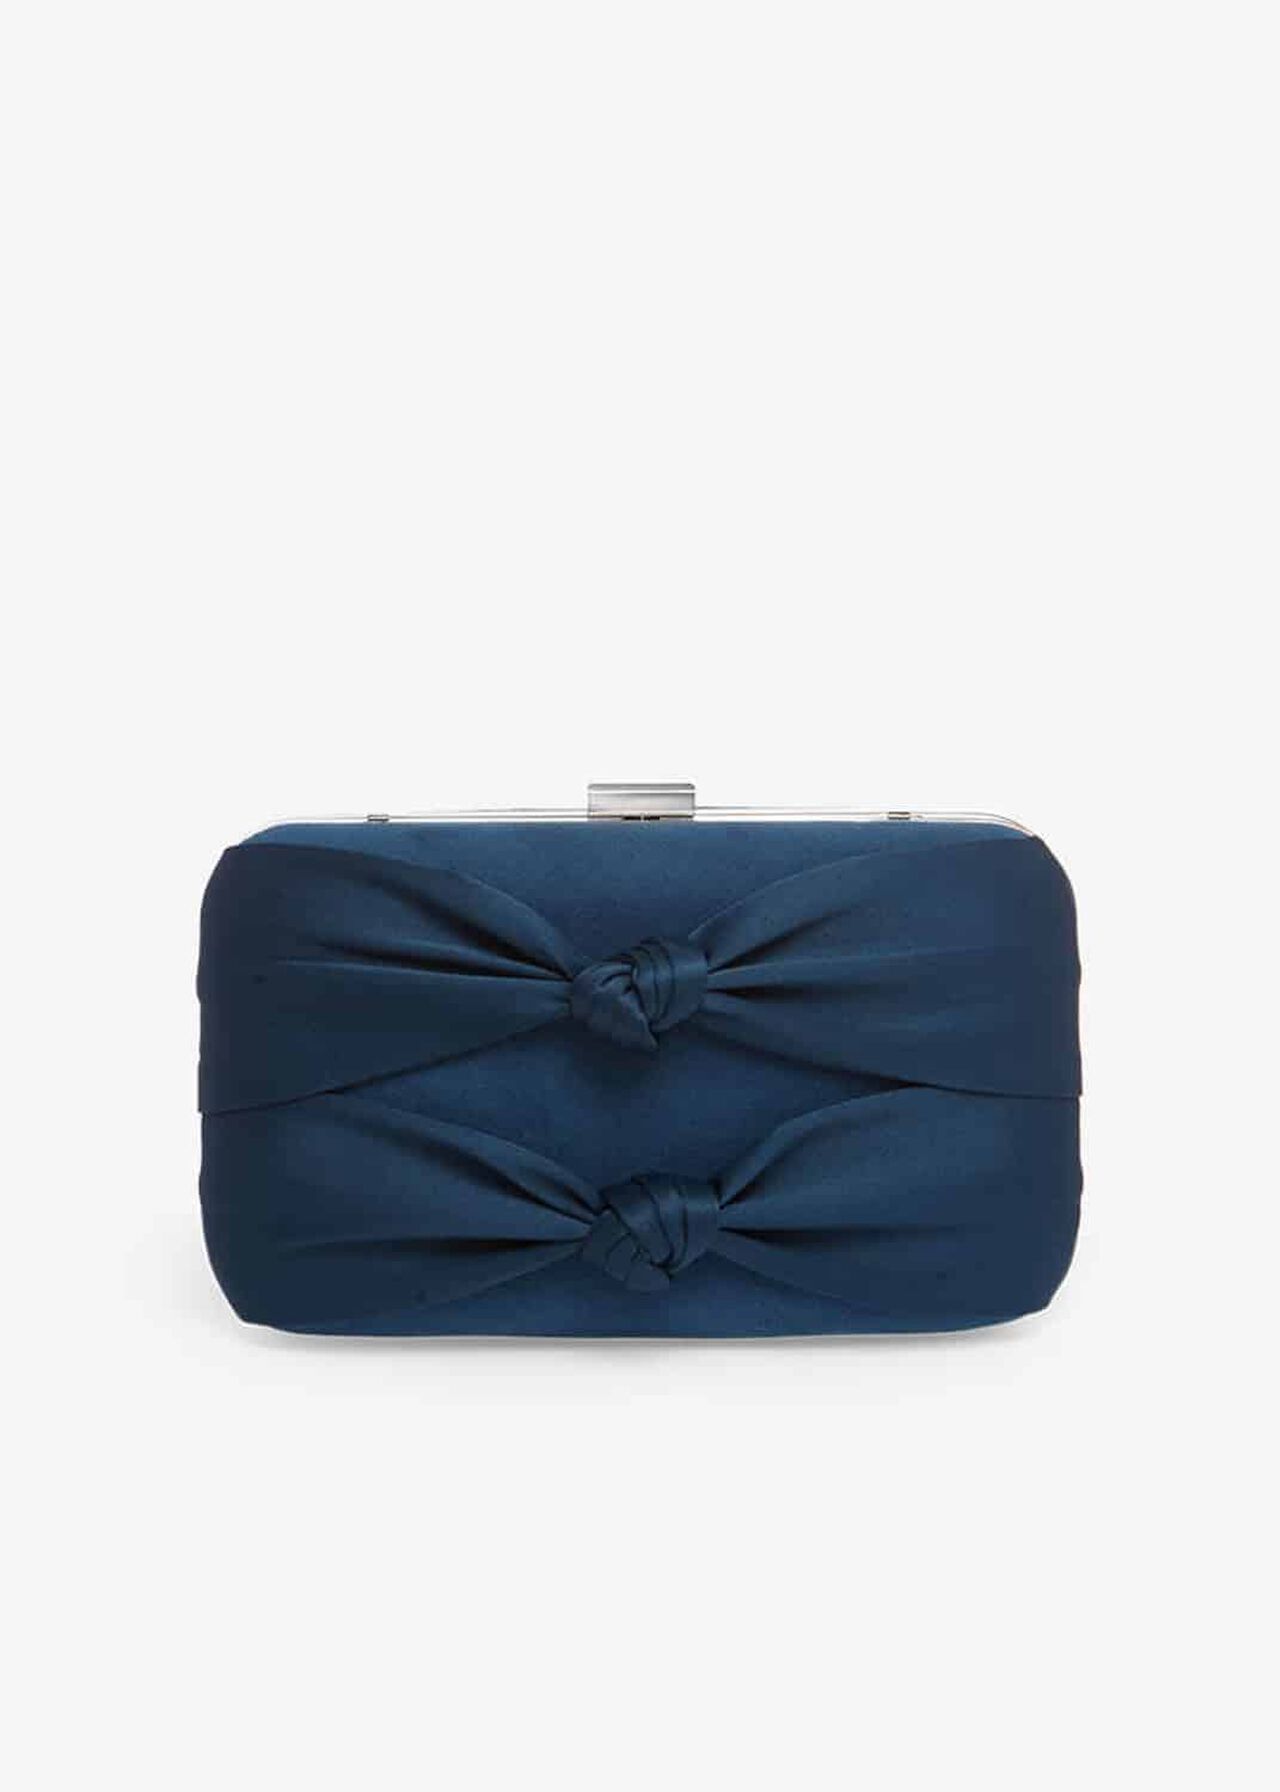 Bonnie Knotted Box Clutch Bag